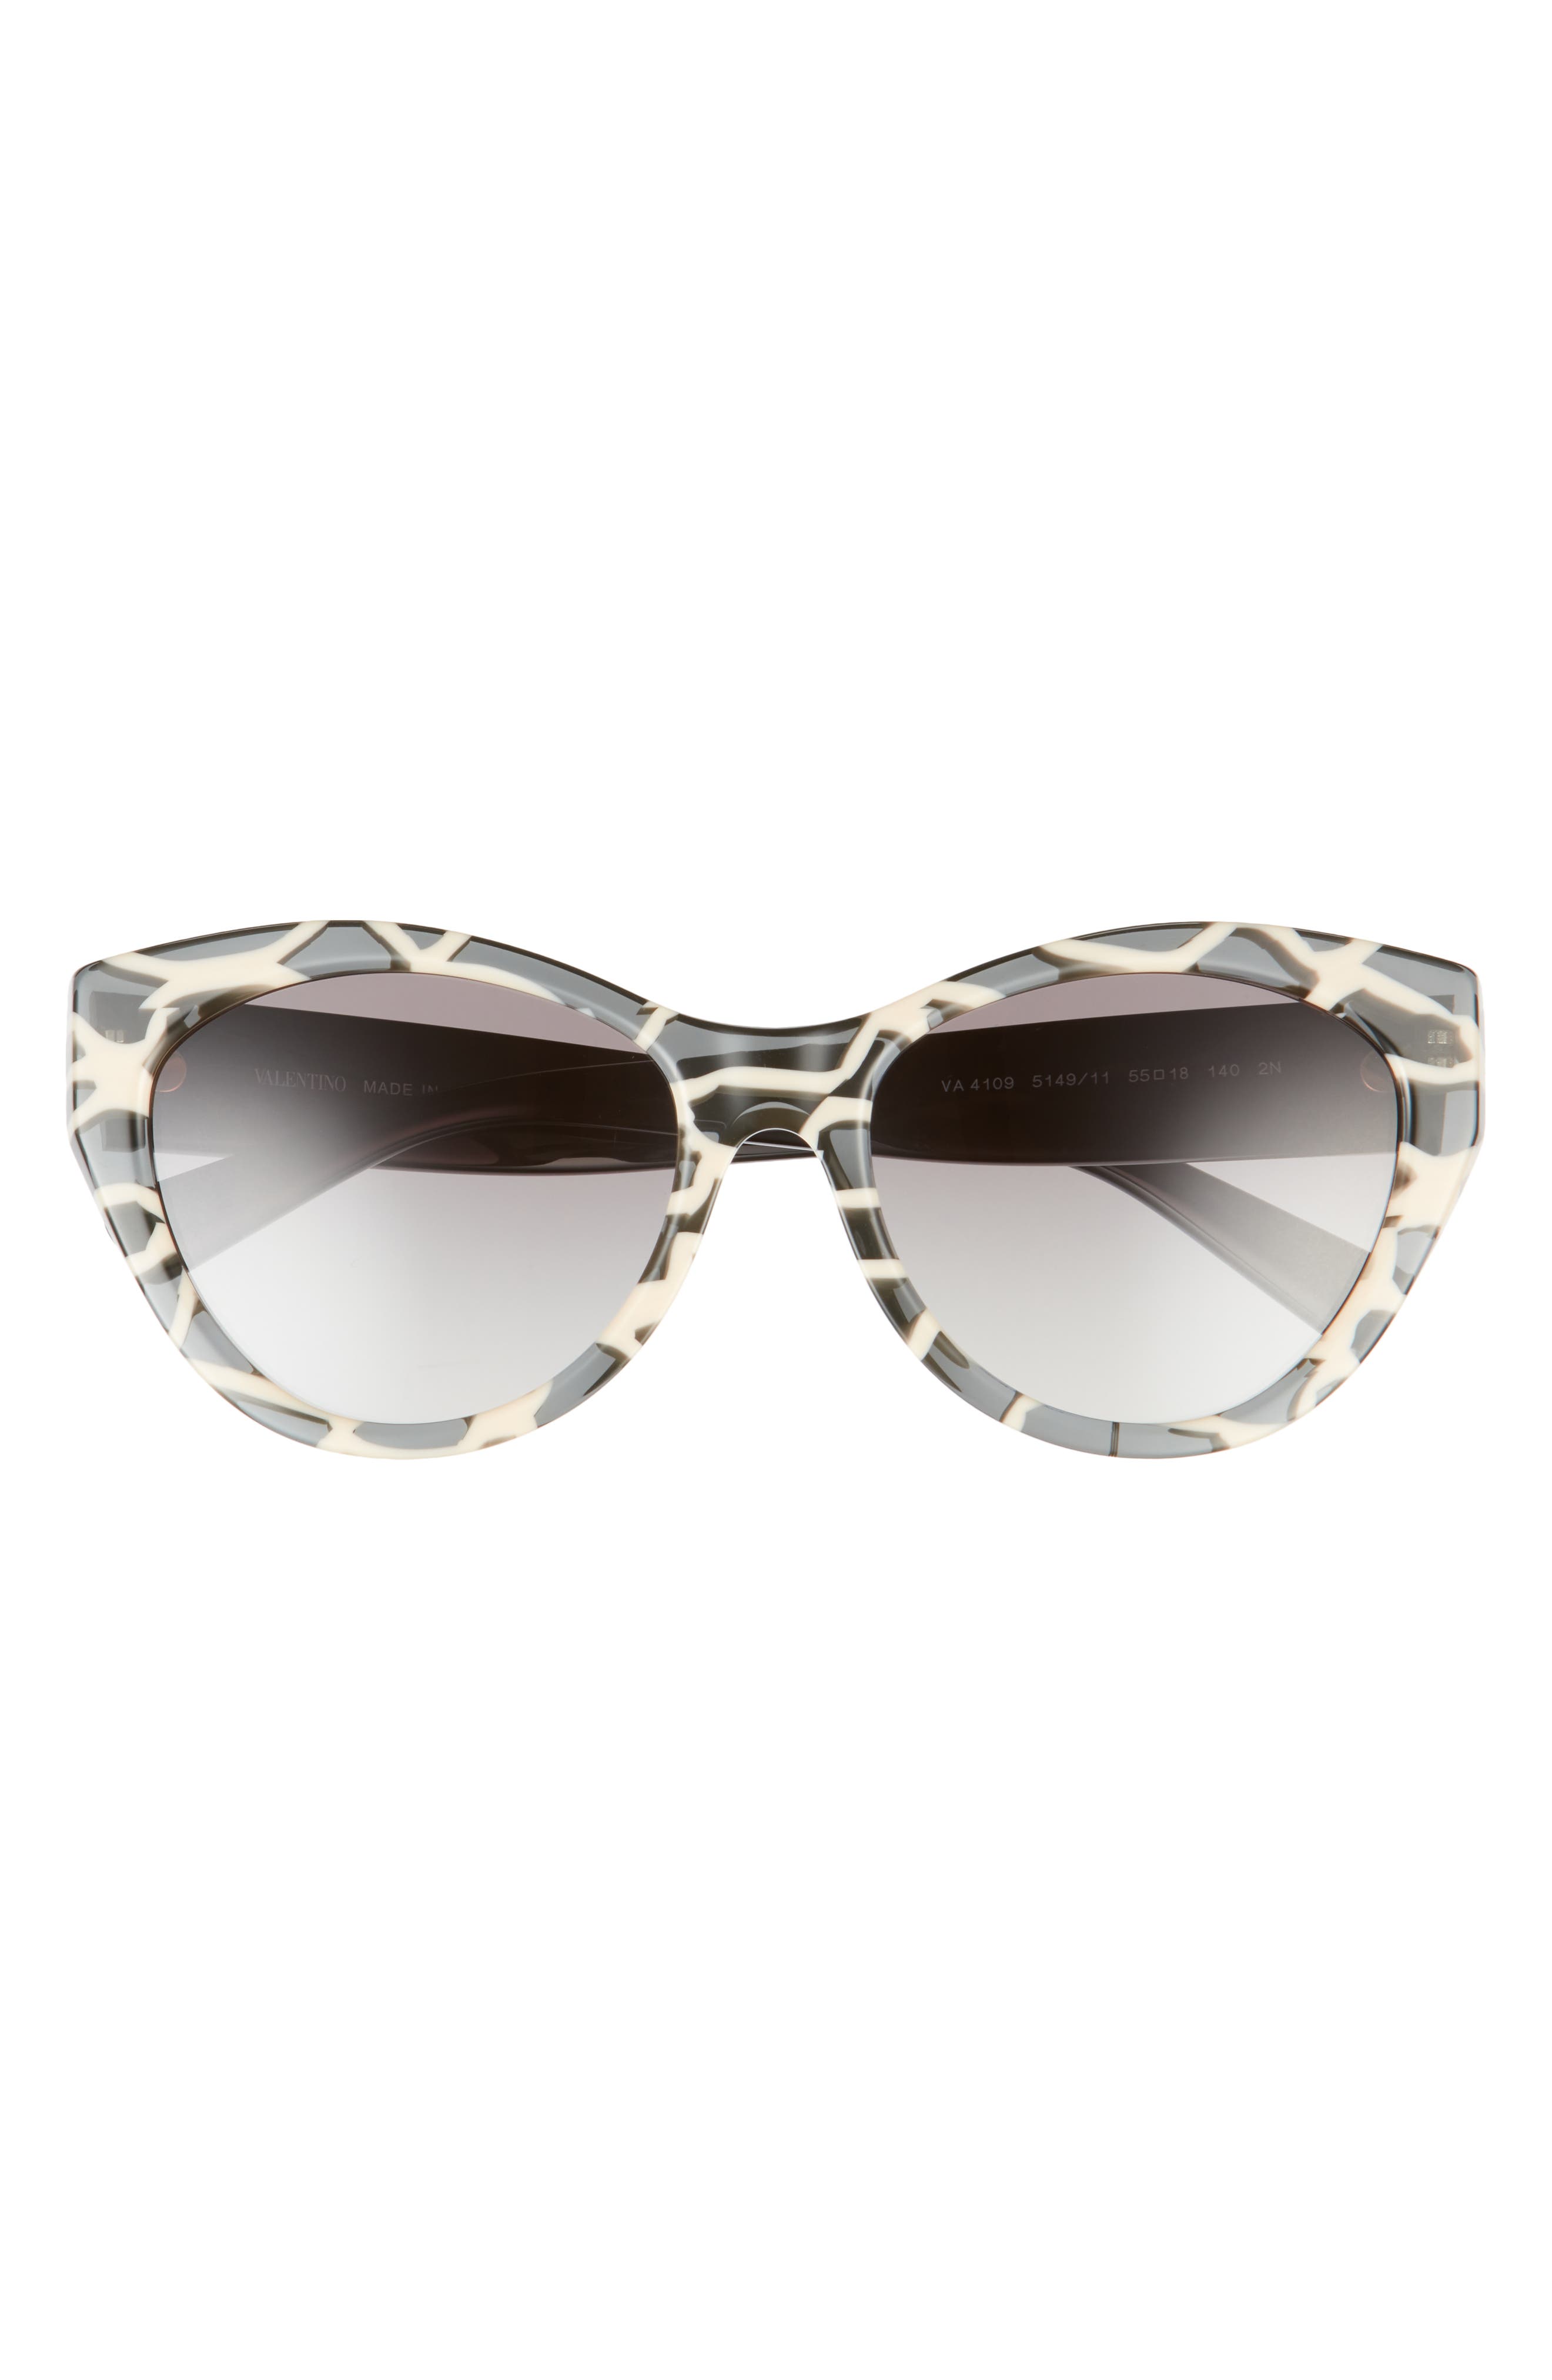 Valentino 55mm Gradient Round Sunglasses in Giraffe/Grey Gradient